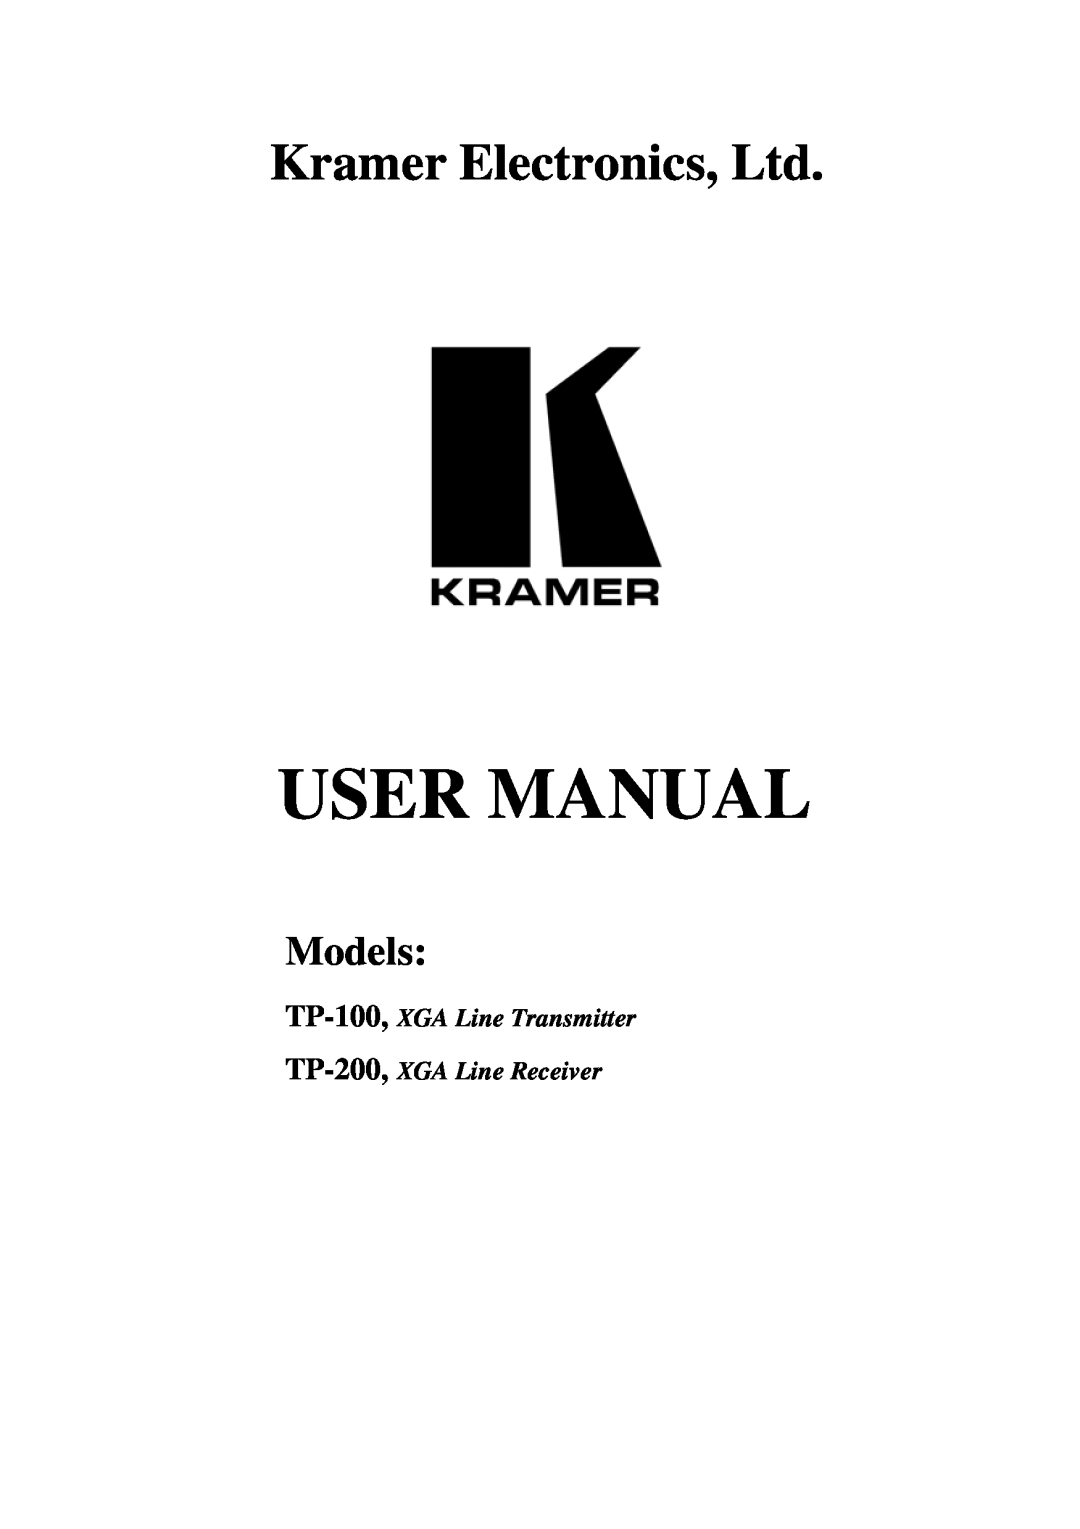 Kramer Electronics user manual Models, TP-100, XGA Line Transmitter, TP-200, XGA Line Receiver 